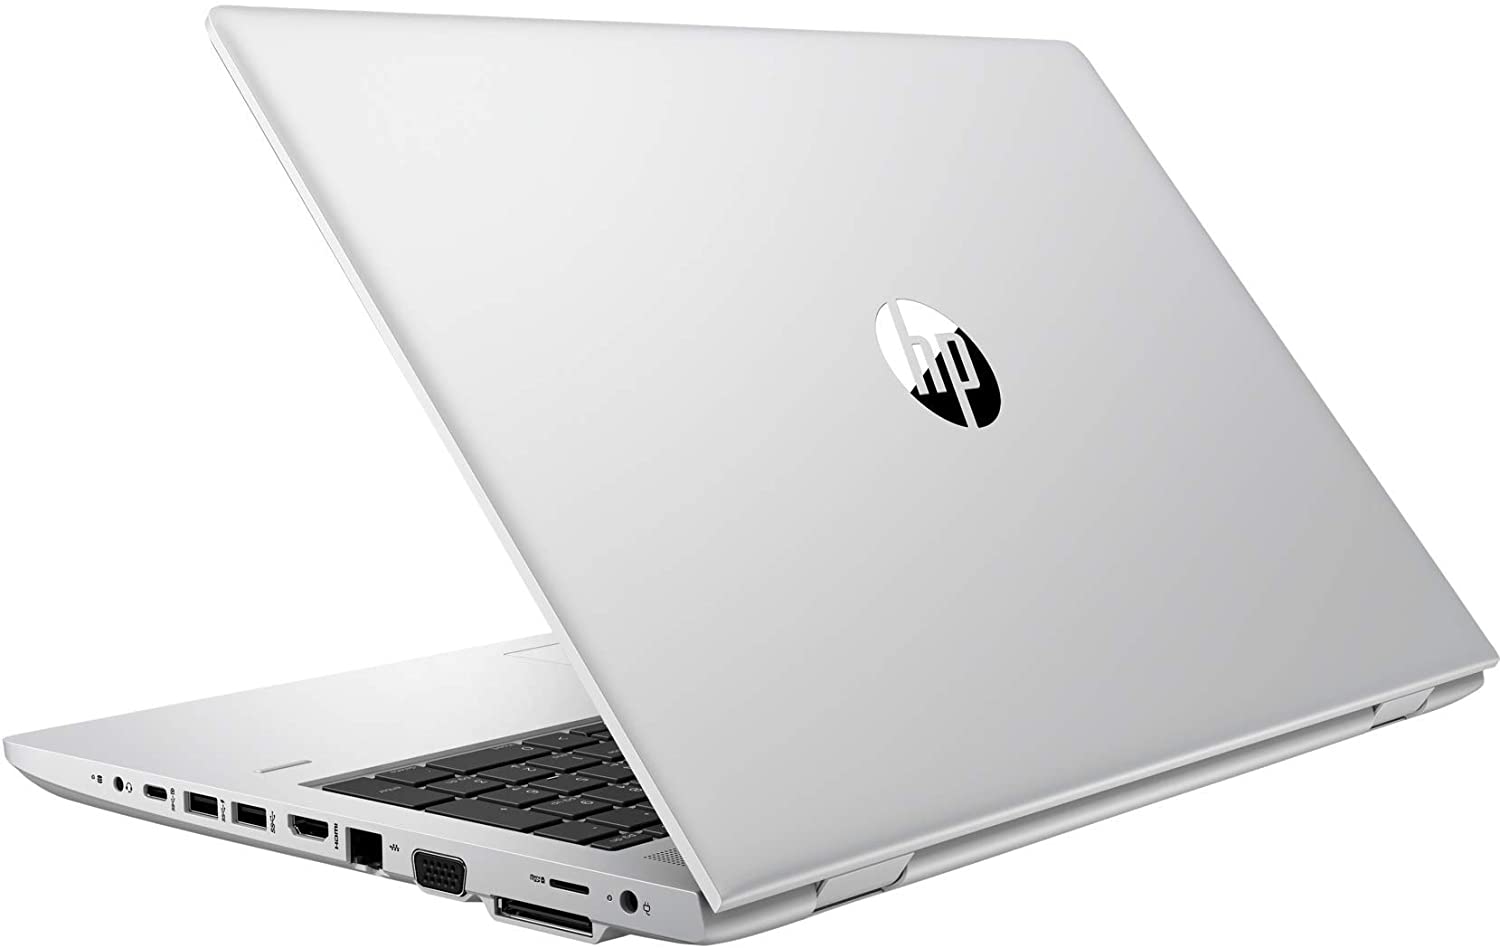 HP ProBook 650 G4 Full HD Laptop, (Intel Core i5-8250U 1.6GHz Processor, 8 GB RAM, 500 GB SSD, Windows 10 Pro) (Silver) 15.6 Inch4